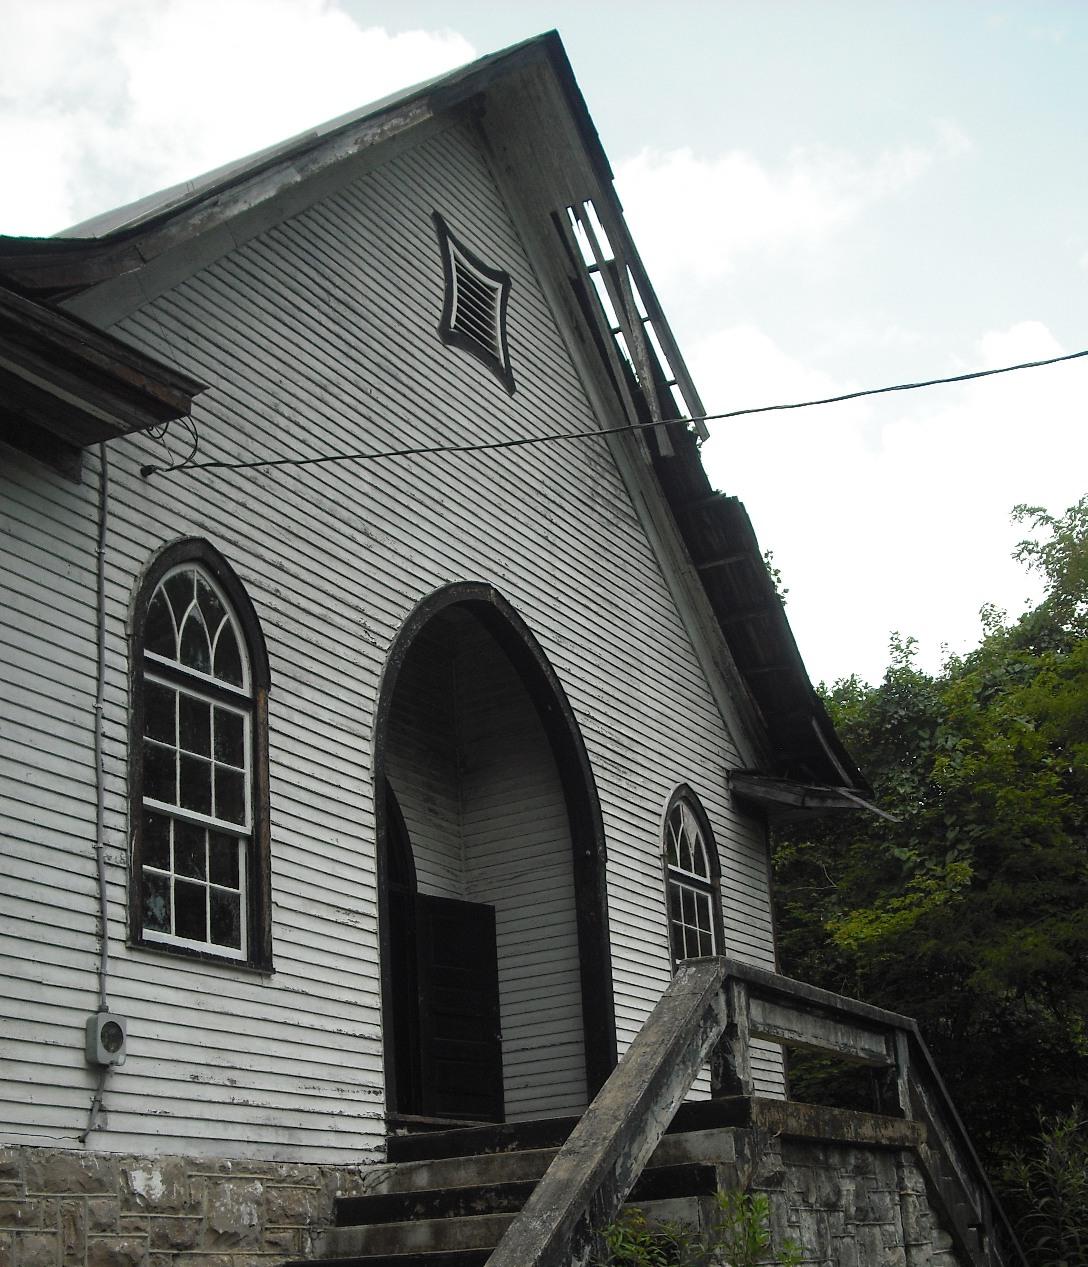 Mount Grove Baptist Church